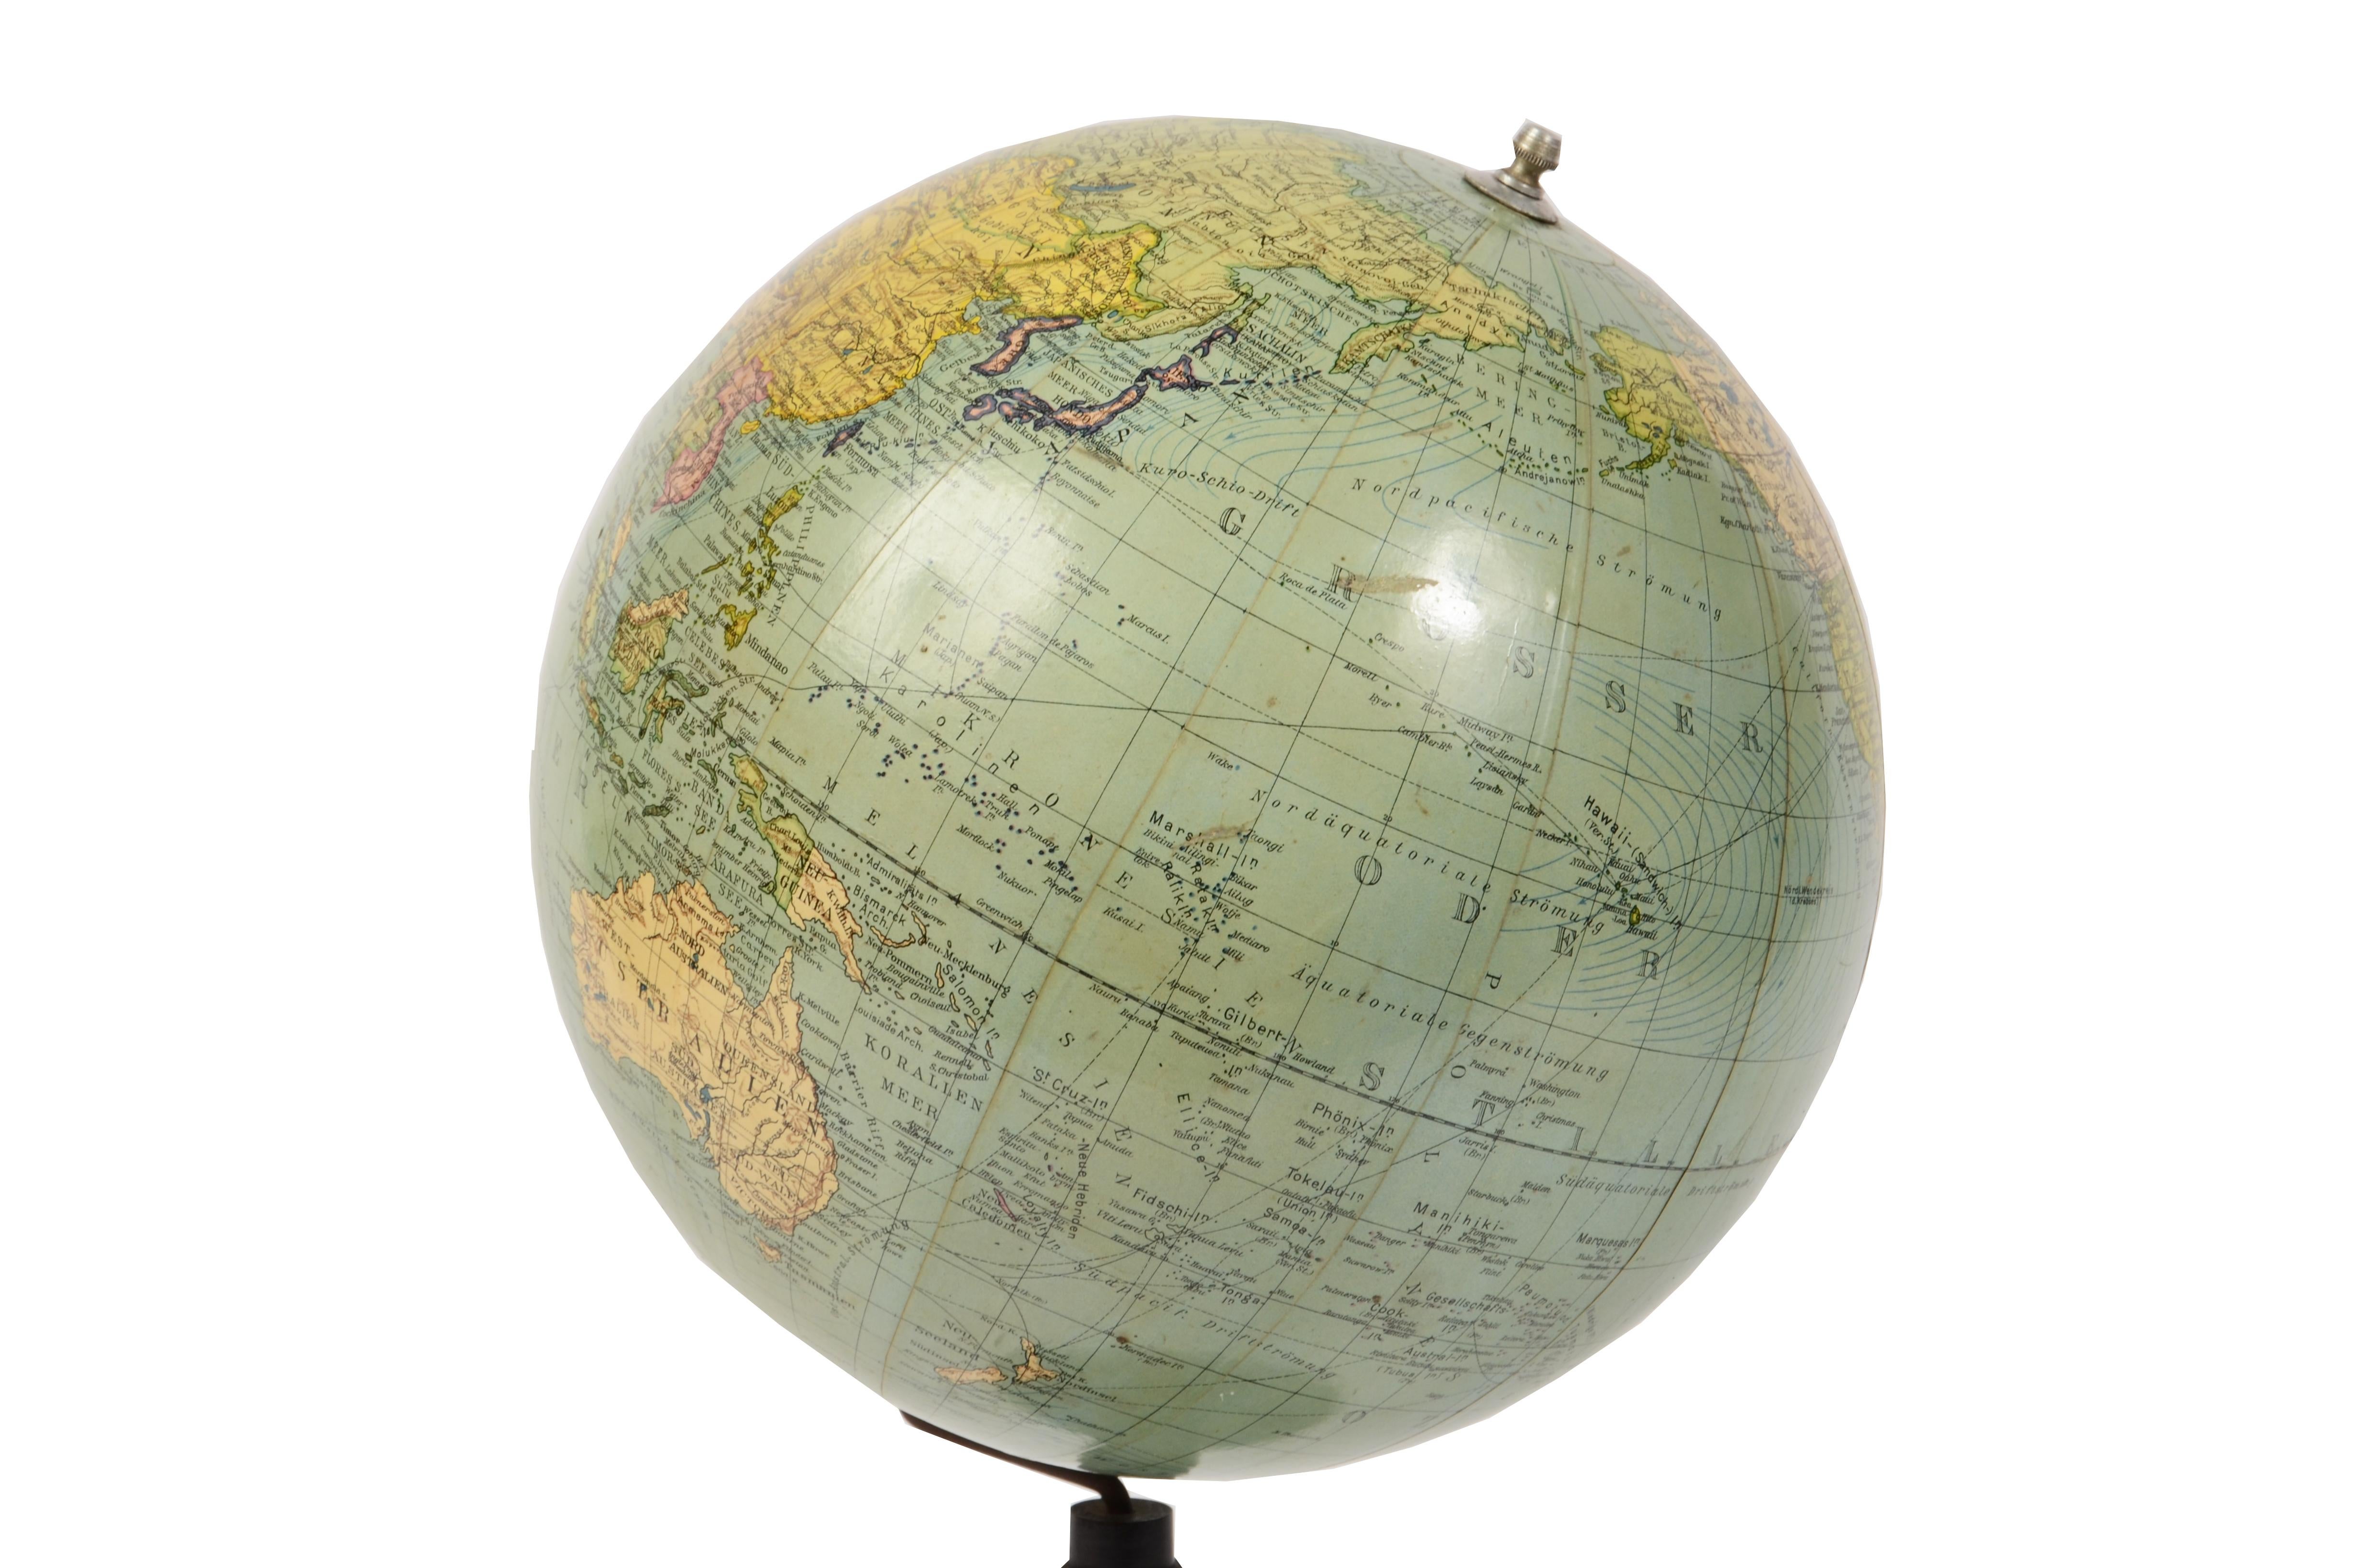 Paper 1940s German Columbus Erdglobus Terrestrial Globe by Cartographer C. Luther